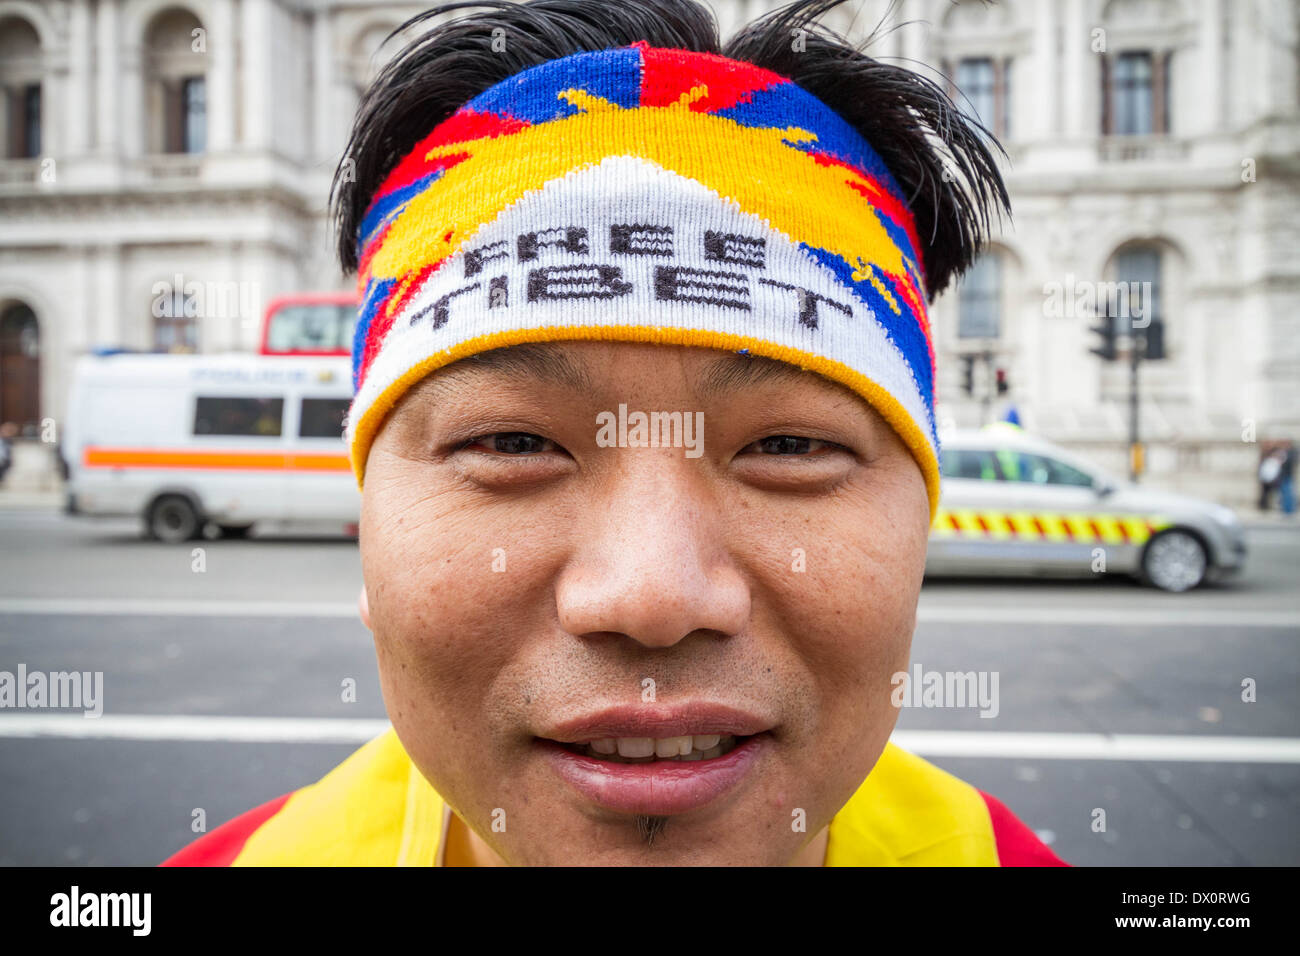 Tibet annuale marcia di protesta per la libertà da occupazione cinese a Londra Foto Stock